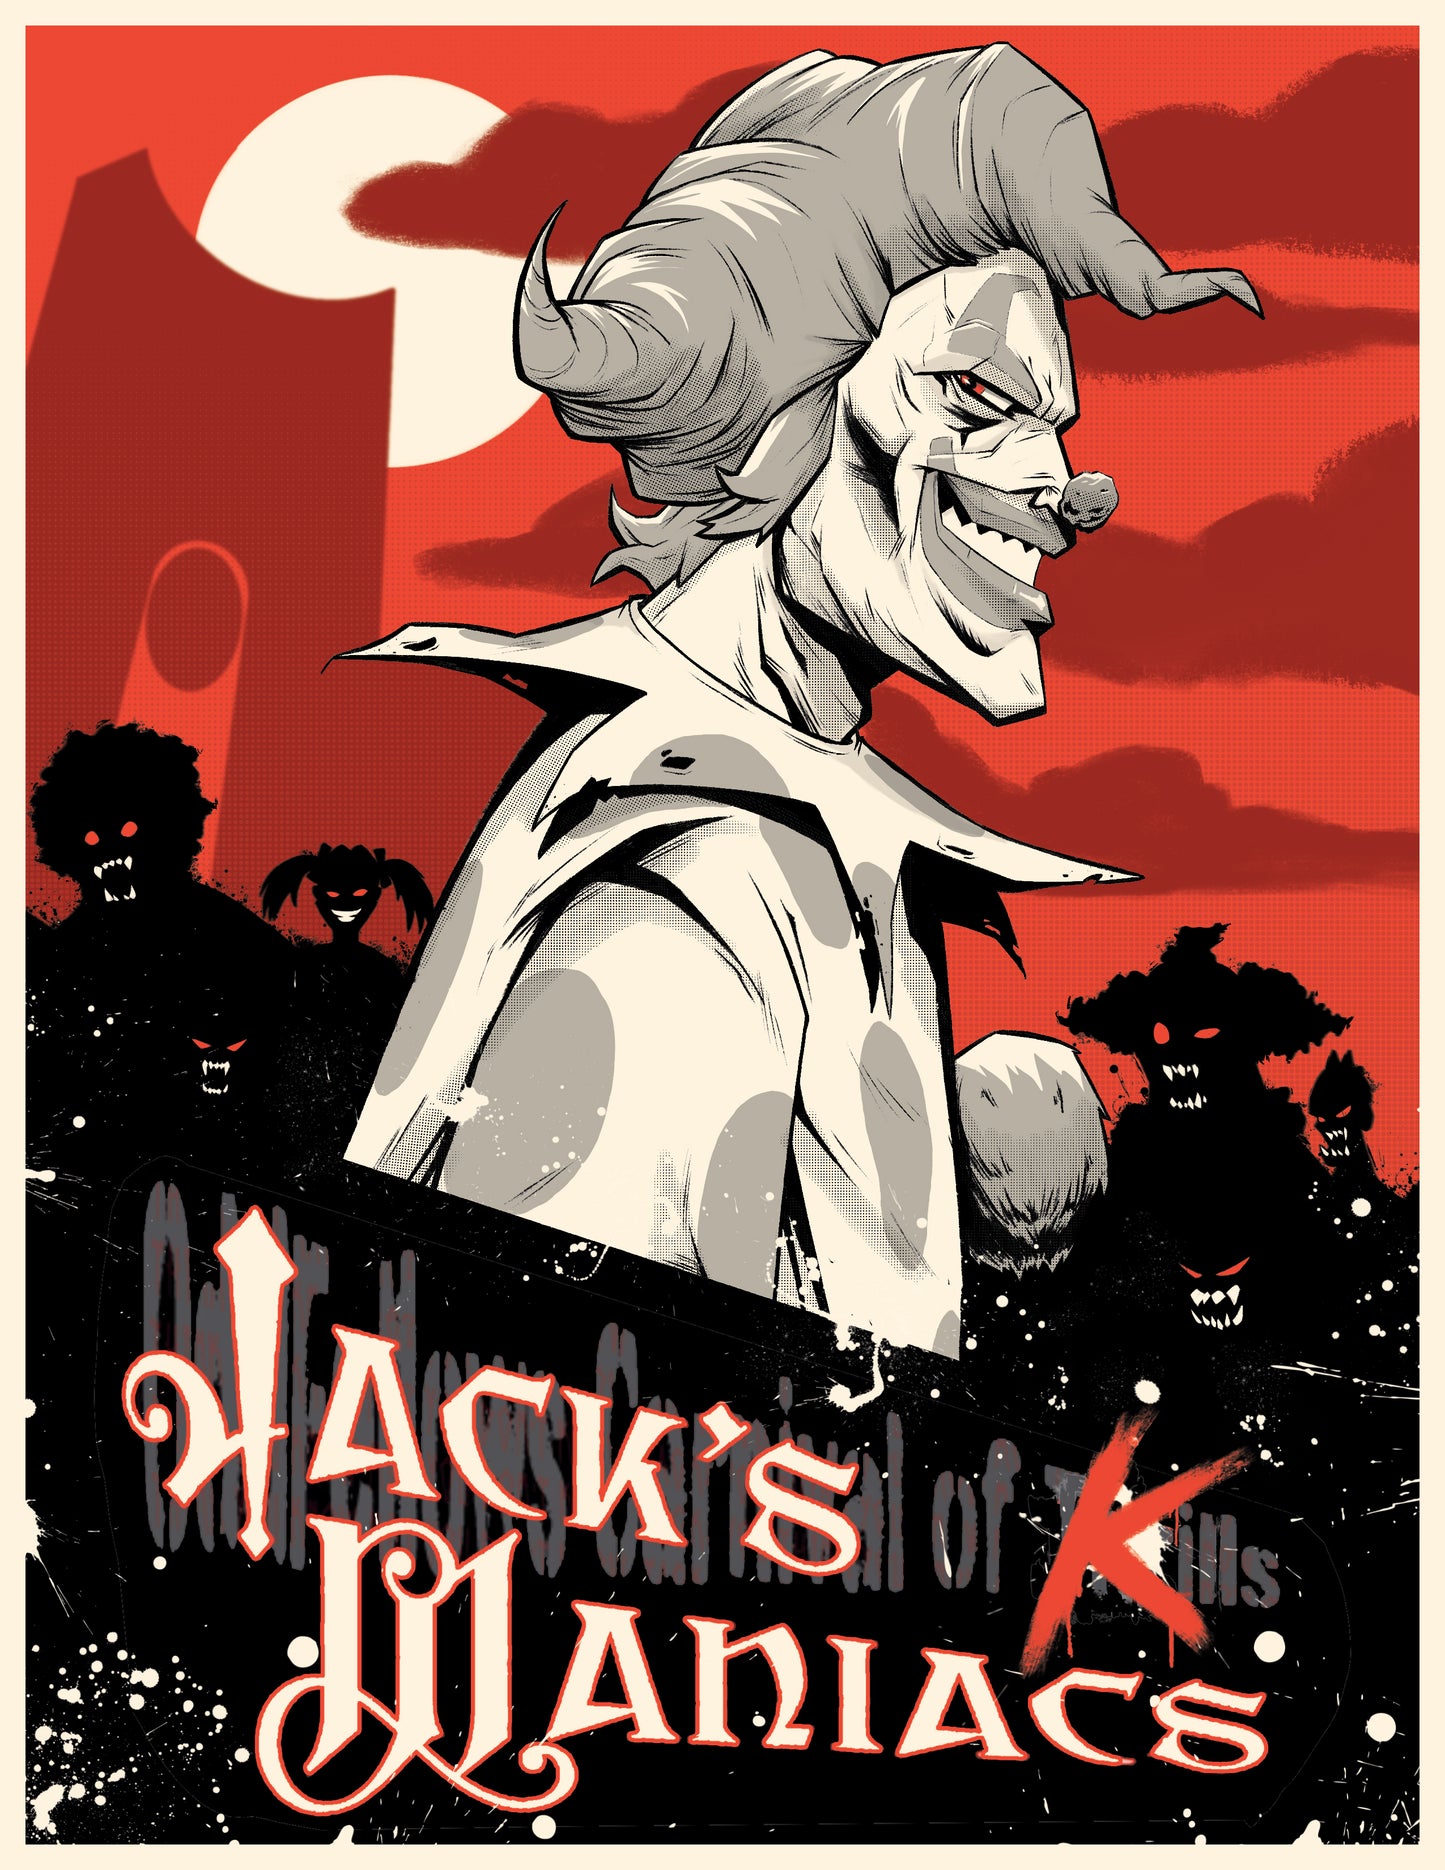 "Jacks Maniacs" Print by Brian Cooper